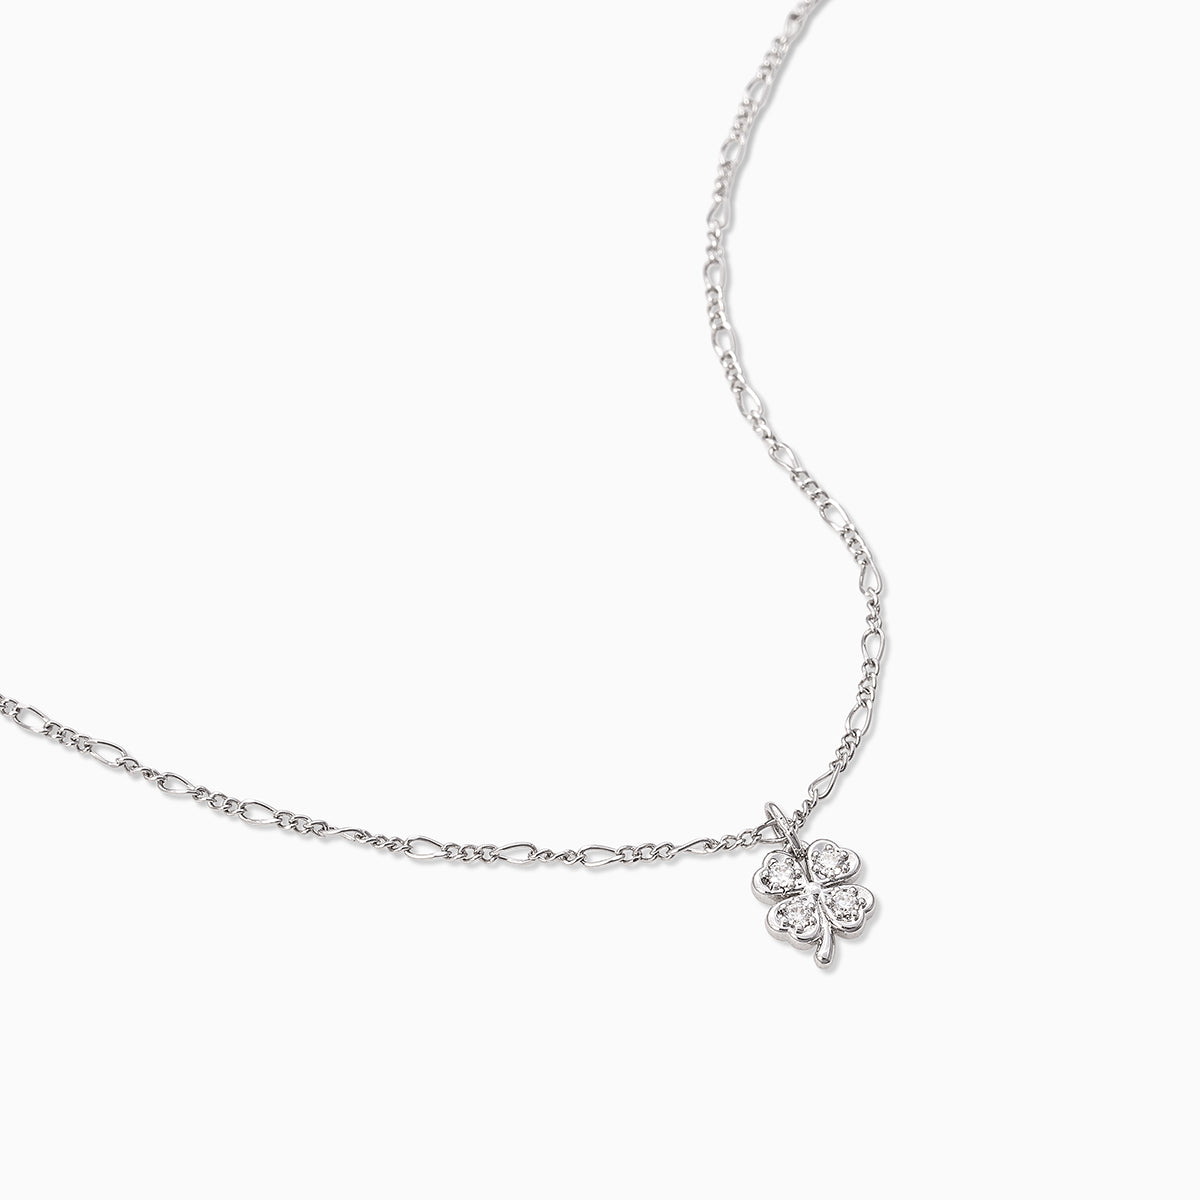 Four Leaf Clover Necklace | Silver | Product Detail Image | Uncommon James